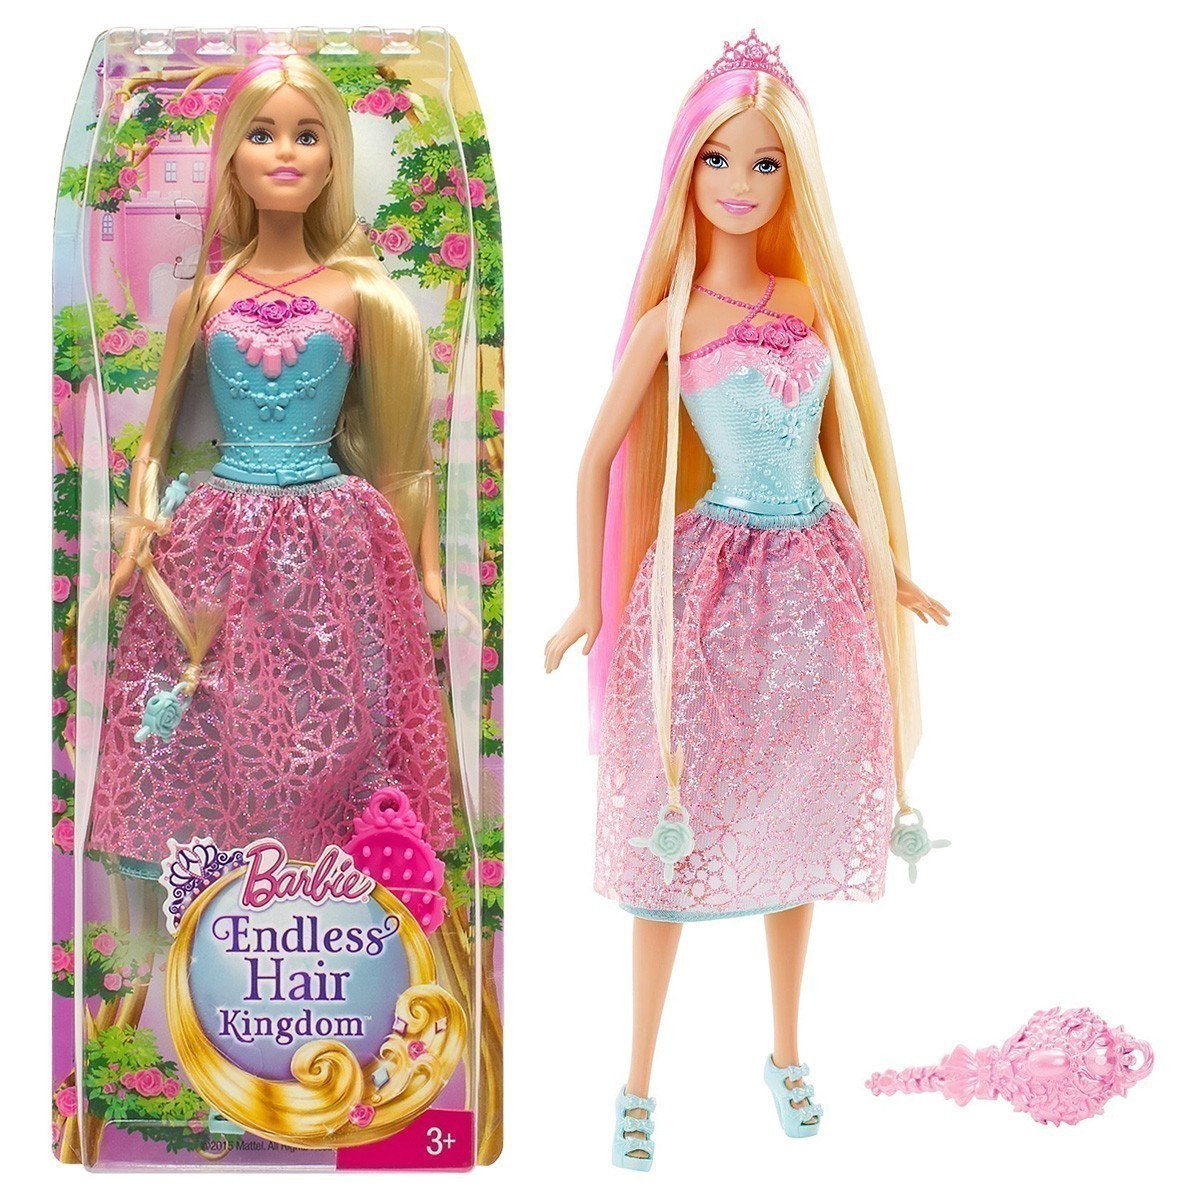 Barbie - Endless Hair Kingdom - Blonde Princess Doll